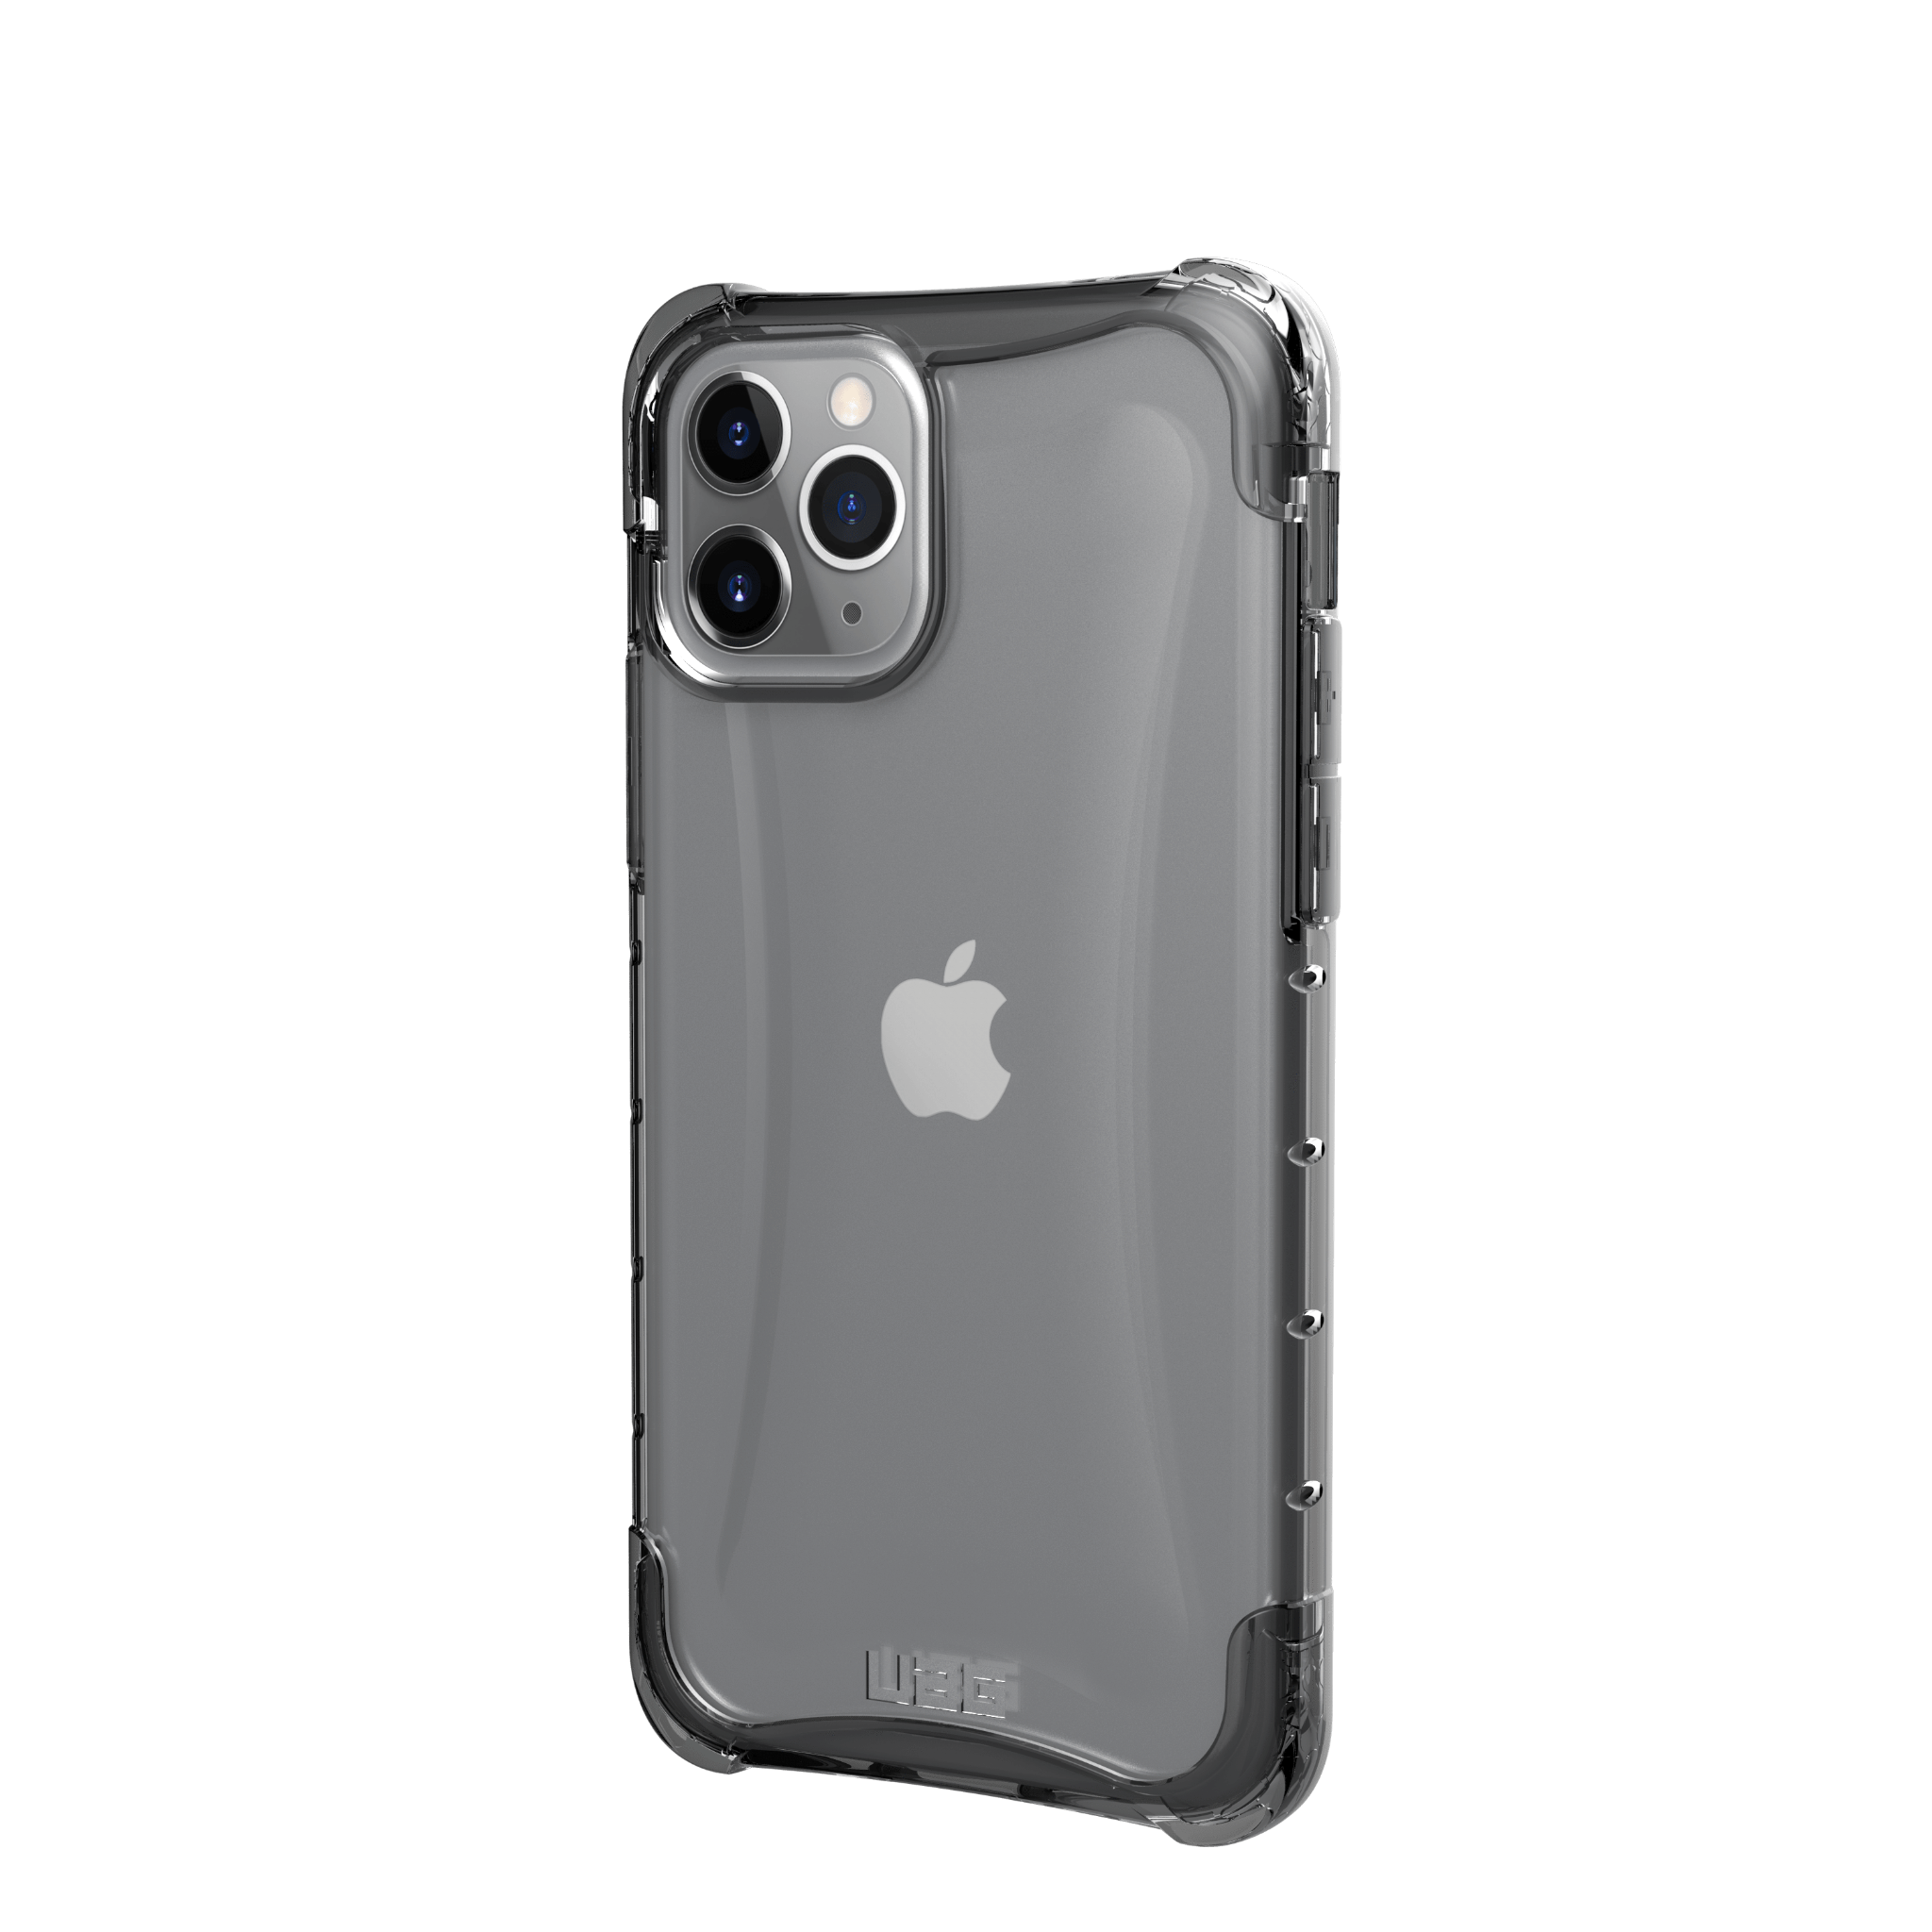  Ốp lưng Plyo cho iPhone 11 Pro [5.8-inch] 